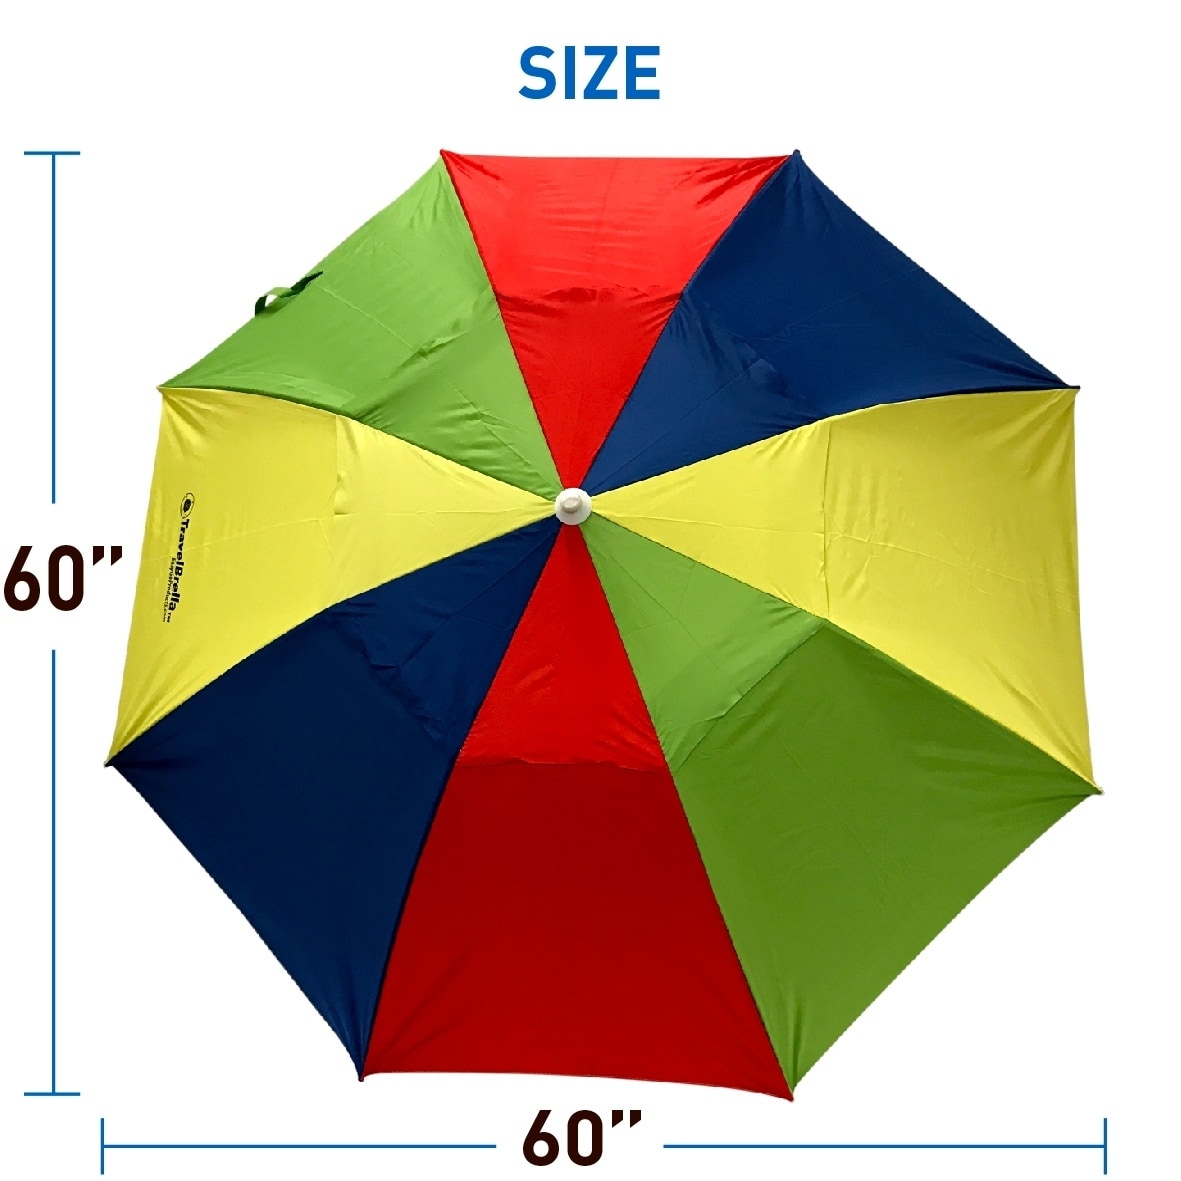 foldable beach umbrella for suitcase